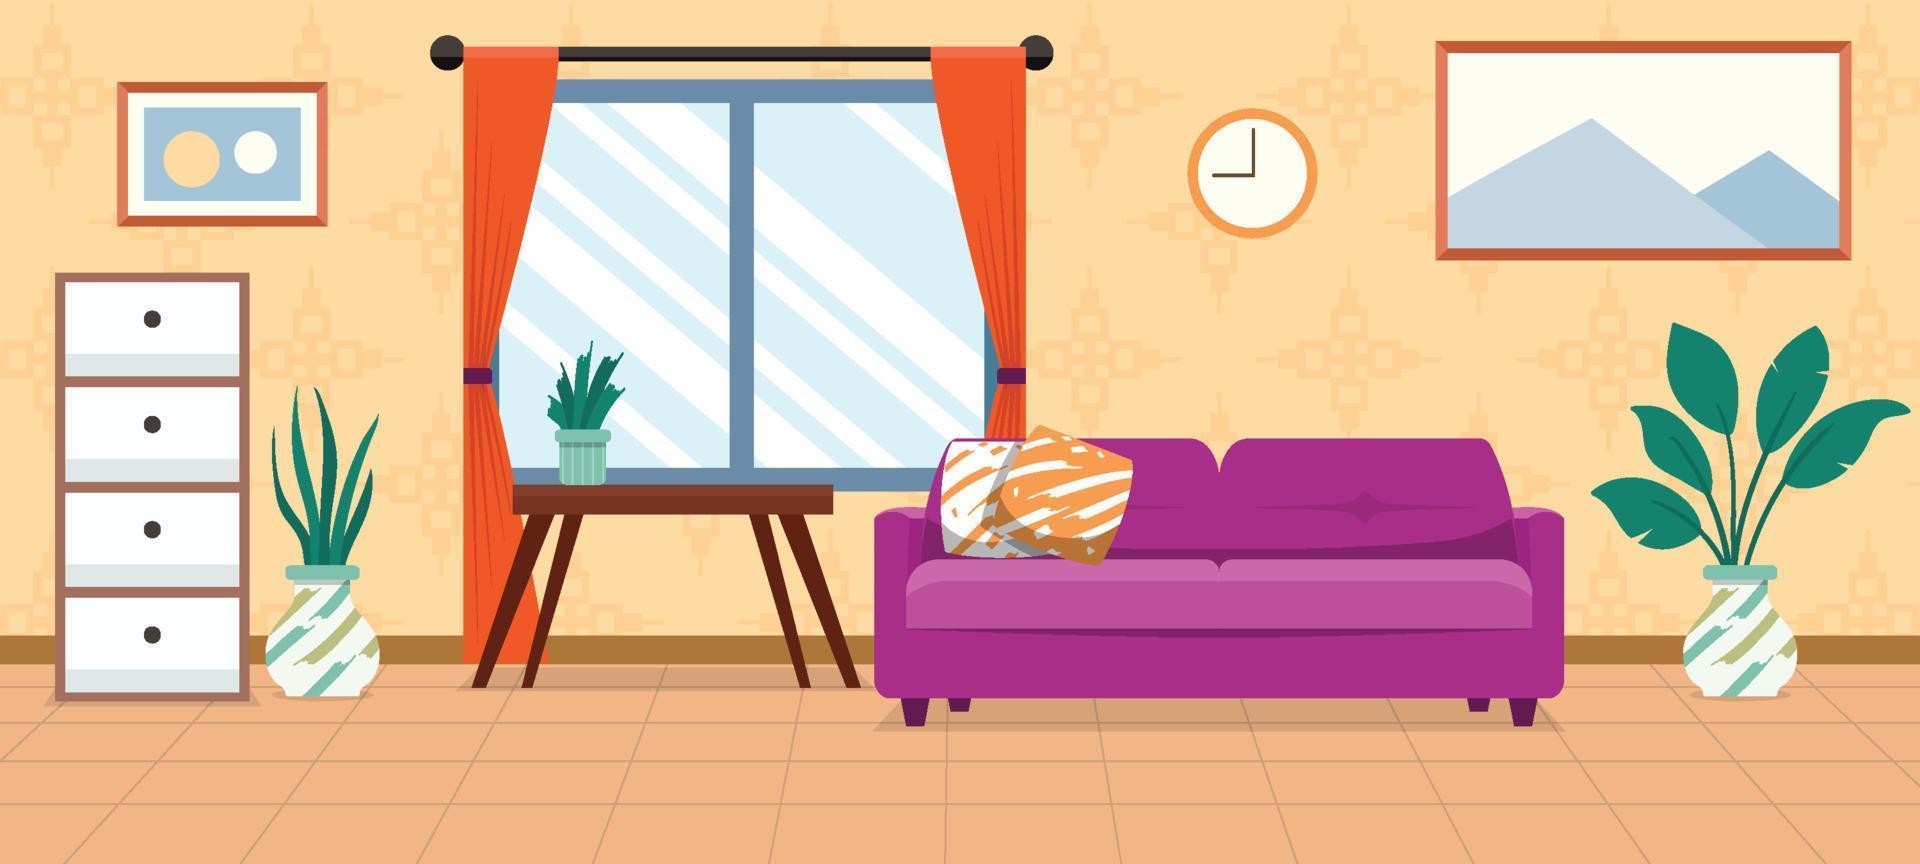 Flat Living Room Interior Background vector